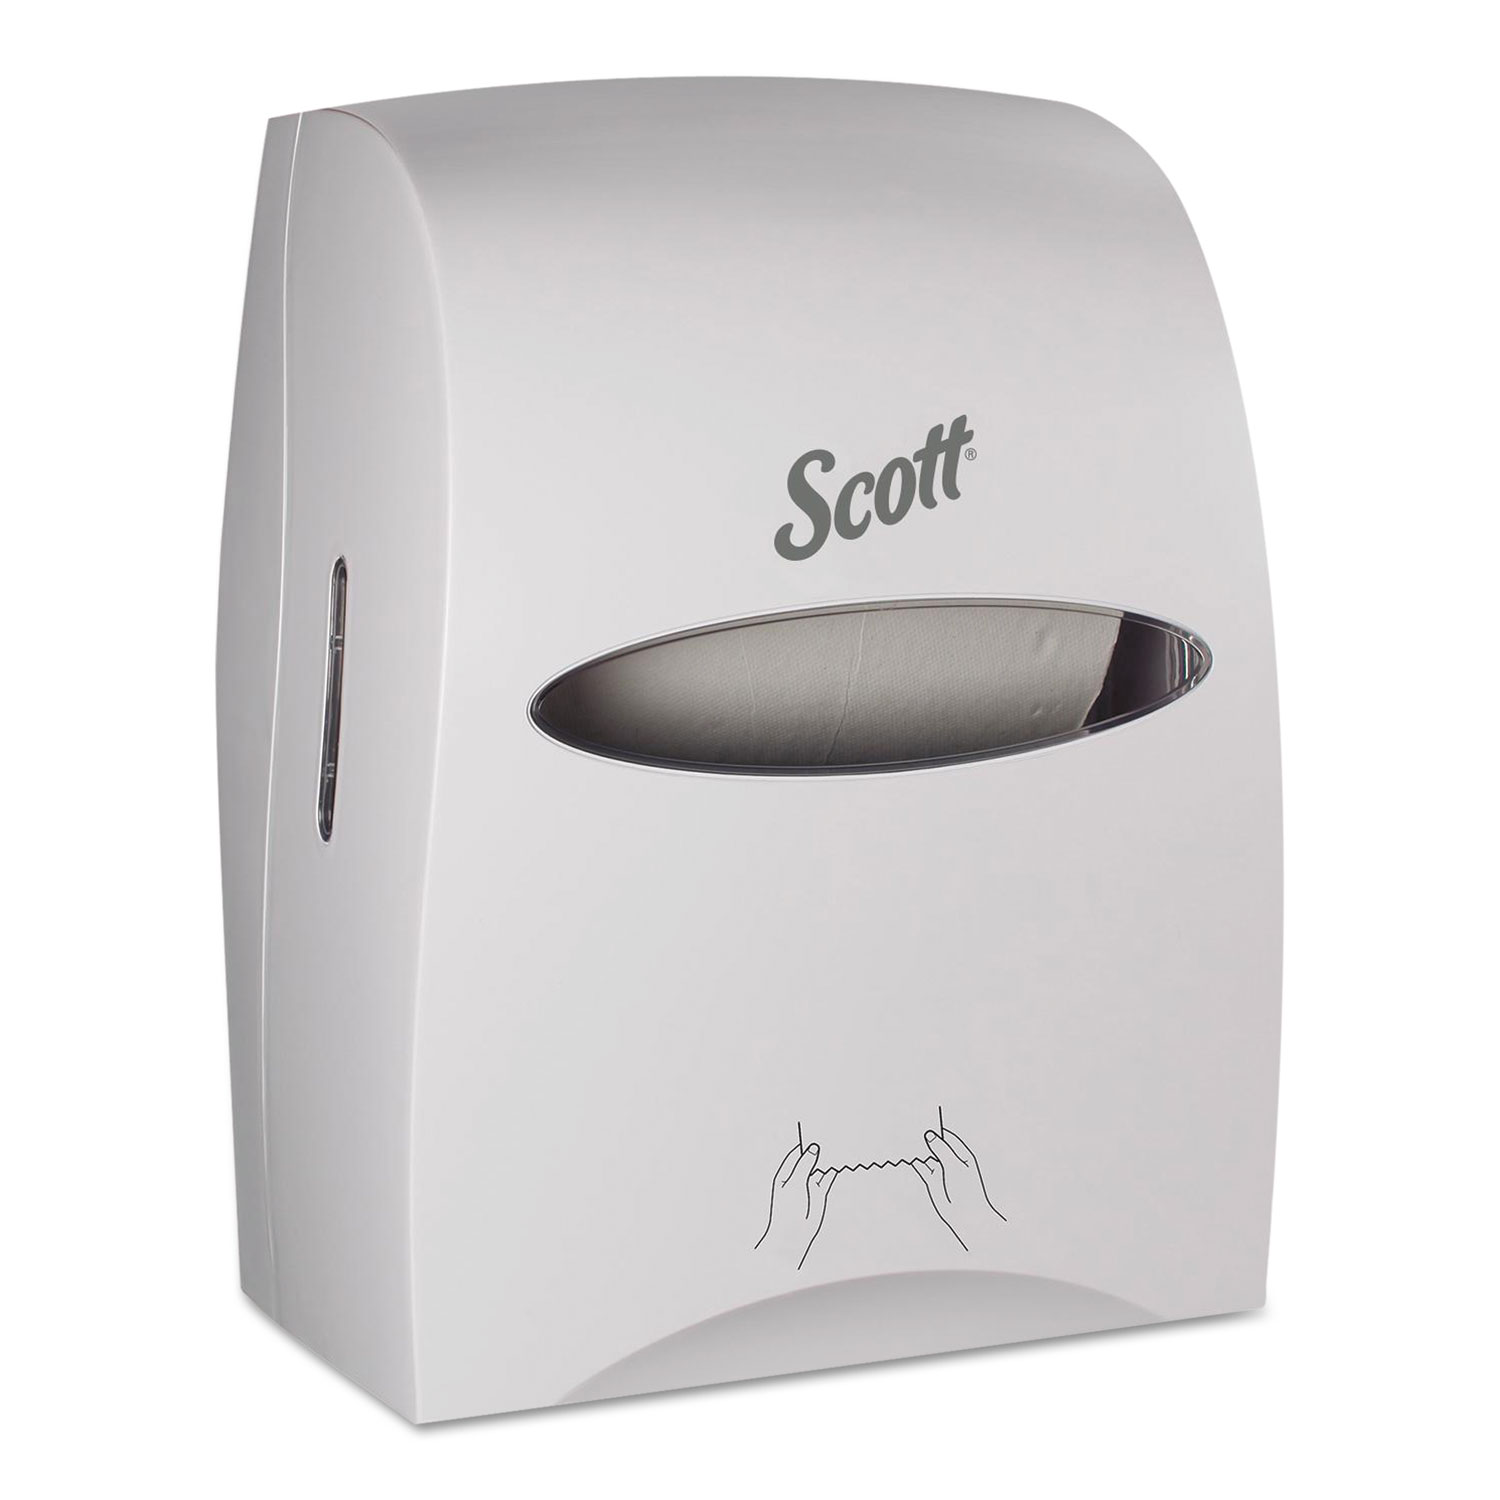 Essential Manual Hard Roll Towel Dispenser, 13.06 x 11 x 16.94, White